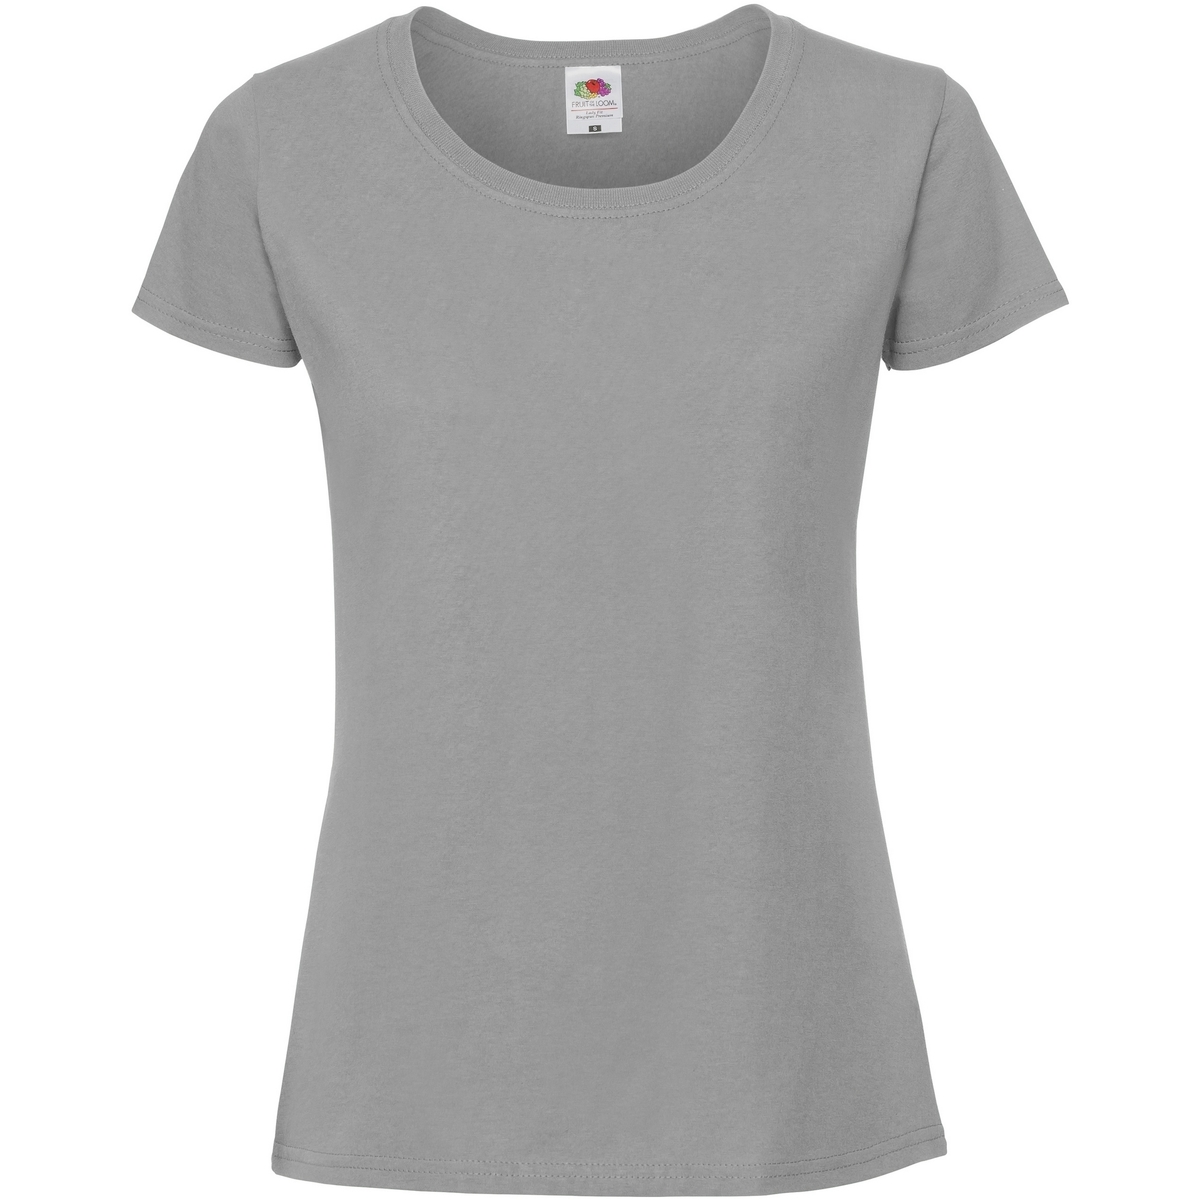 Vêtements Femme T-shirts manches longues Fruit Of The Loom SS424 Gris